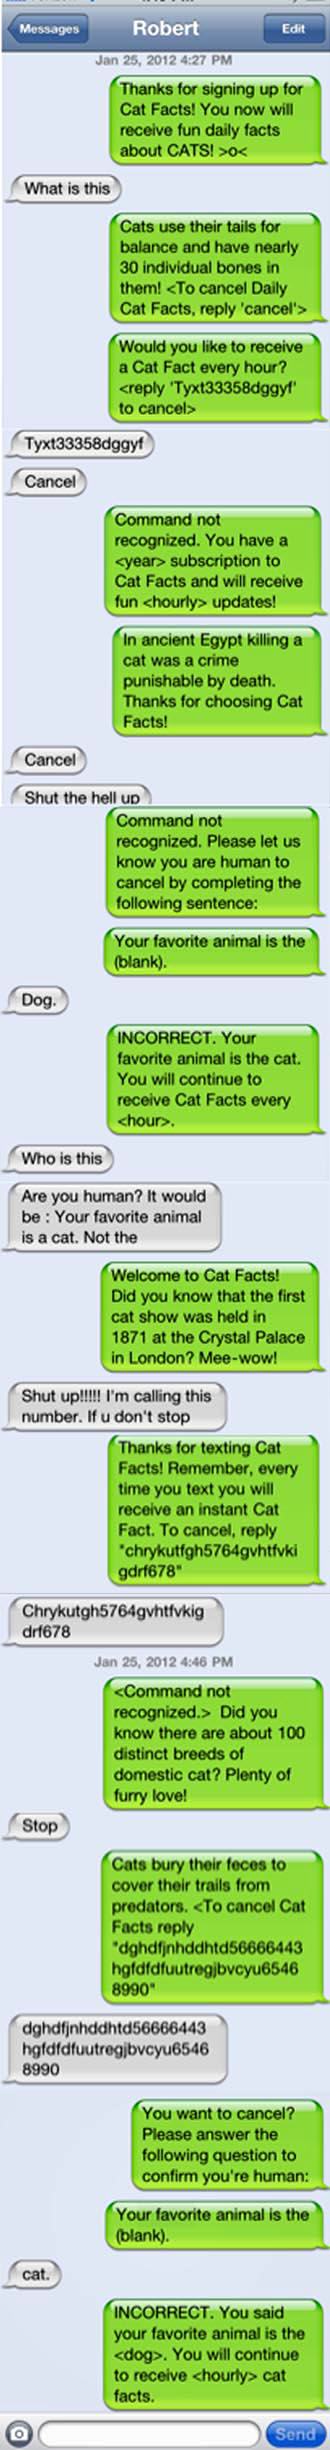 Hilarious Cat Facts Prank. Mee-wow!